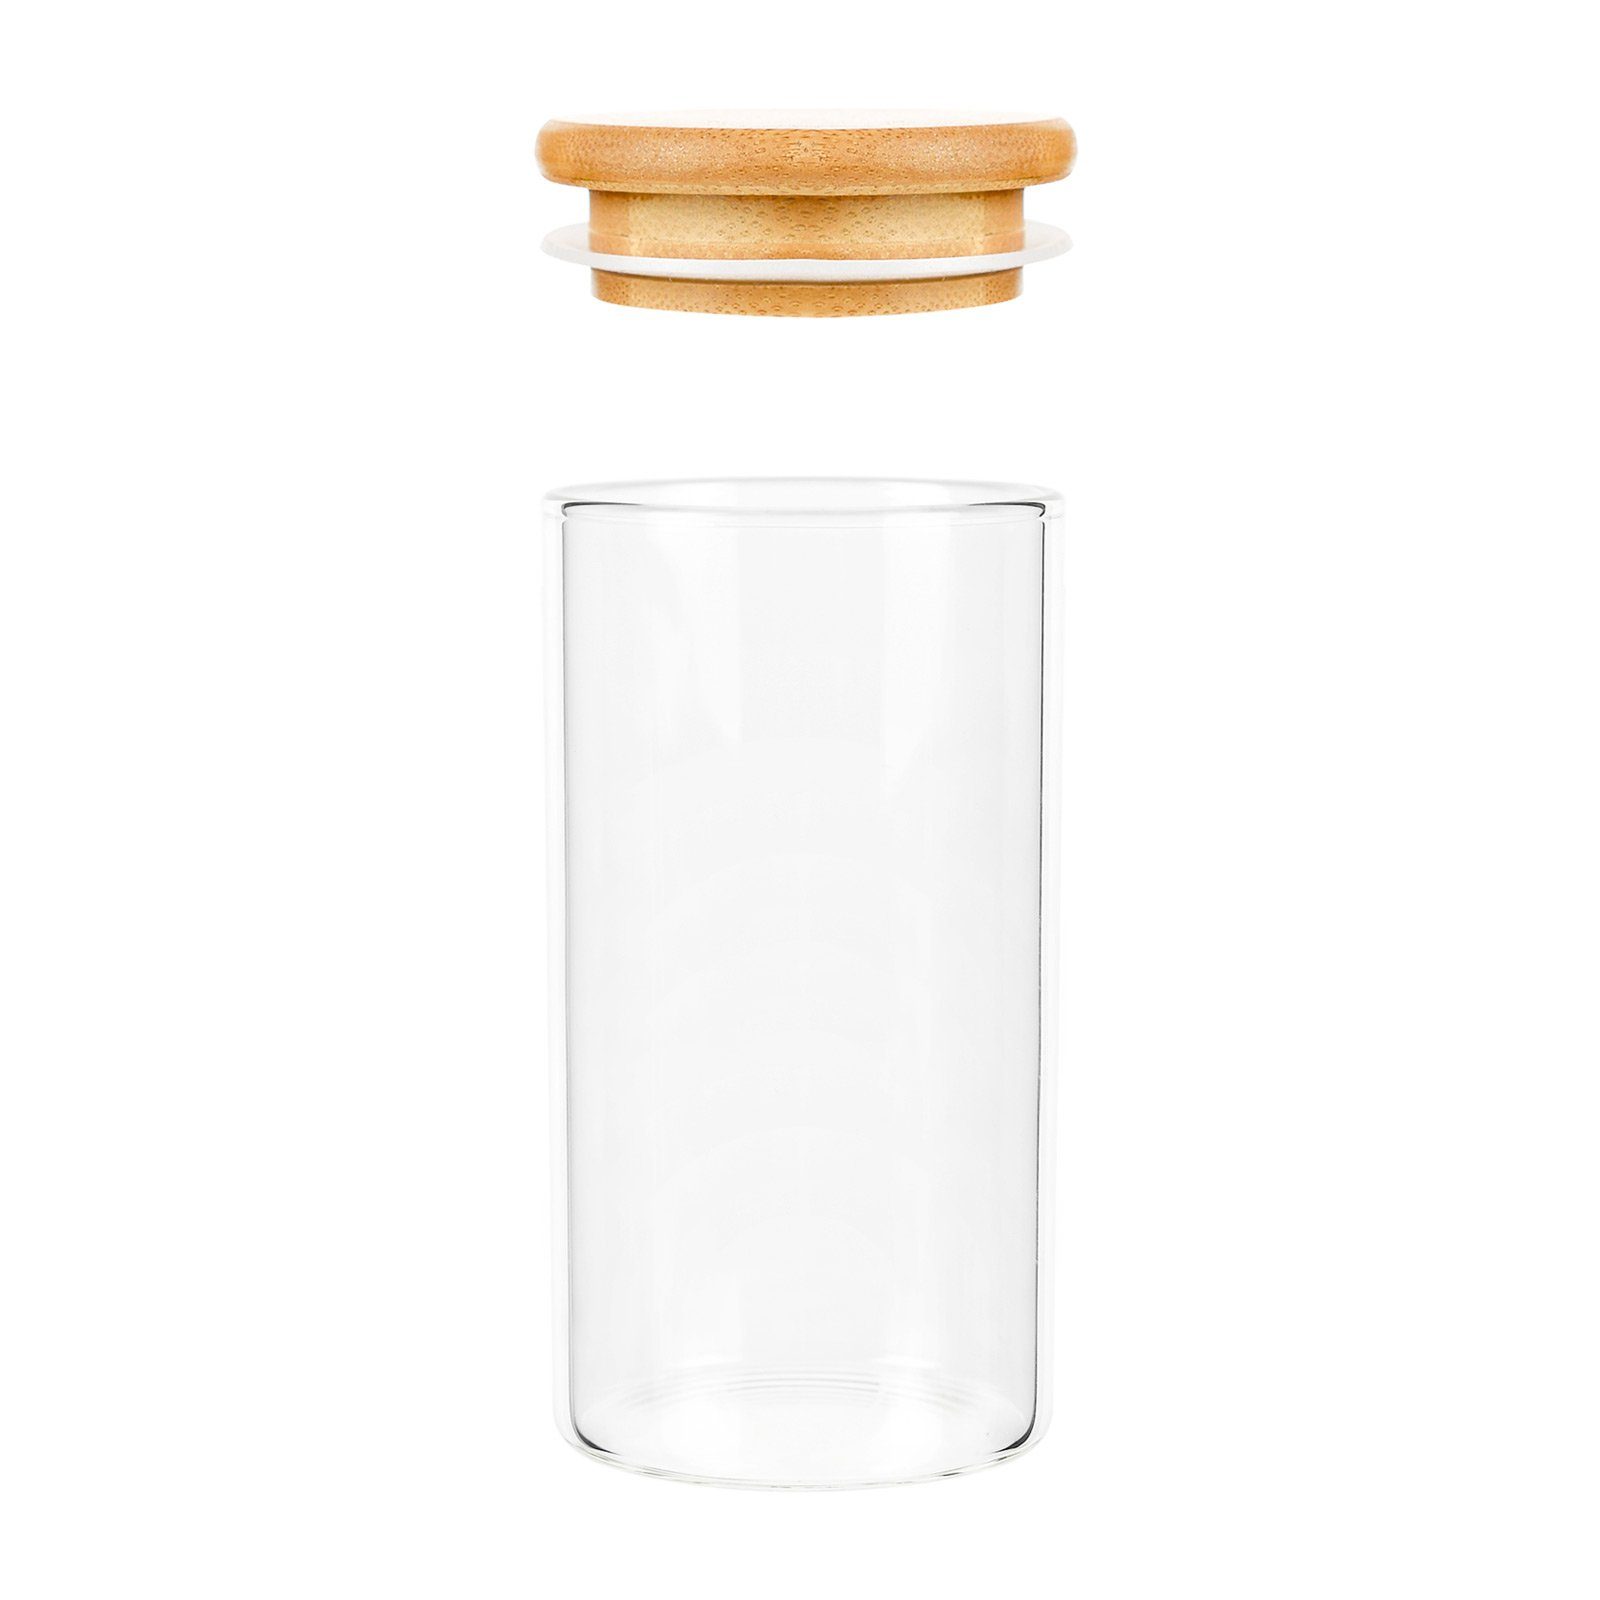 6oz Glass Jars Set with Wood Airtight Lids Small Food Storage